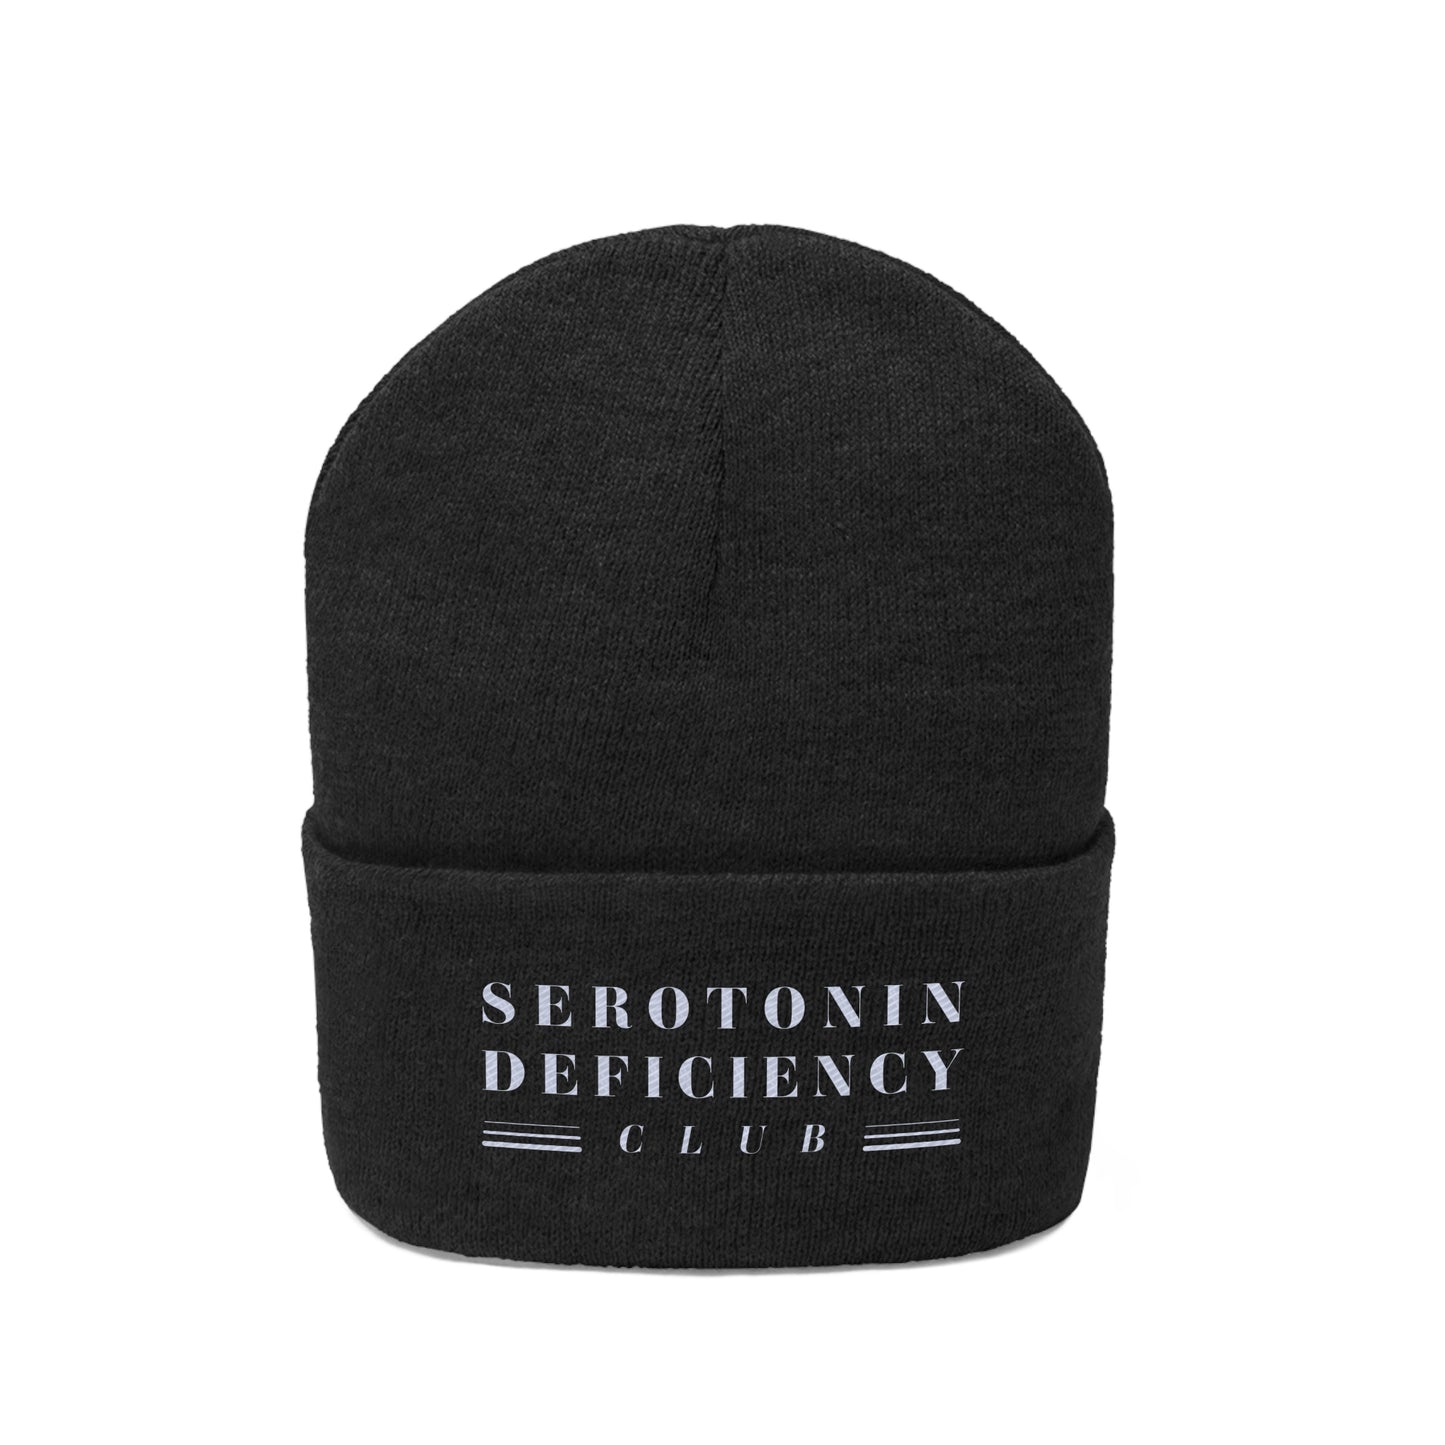 Serotonin Deficiency Club Beanie